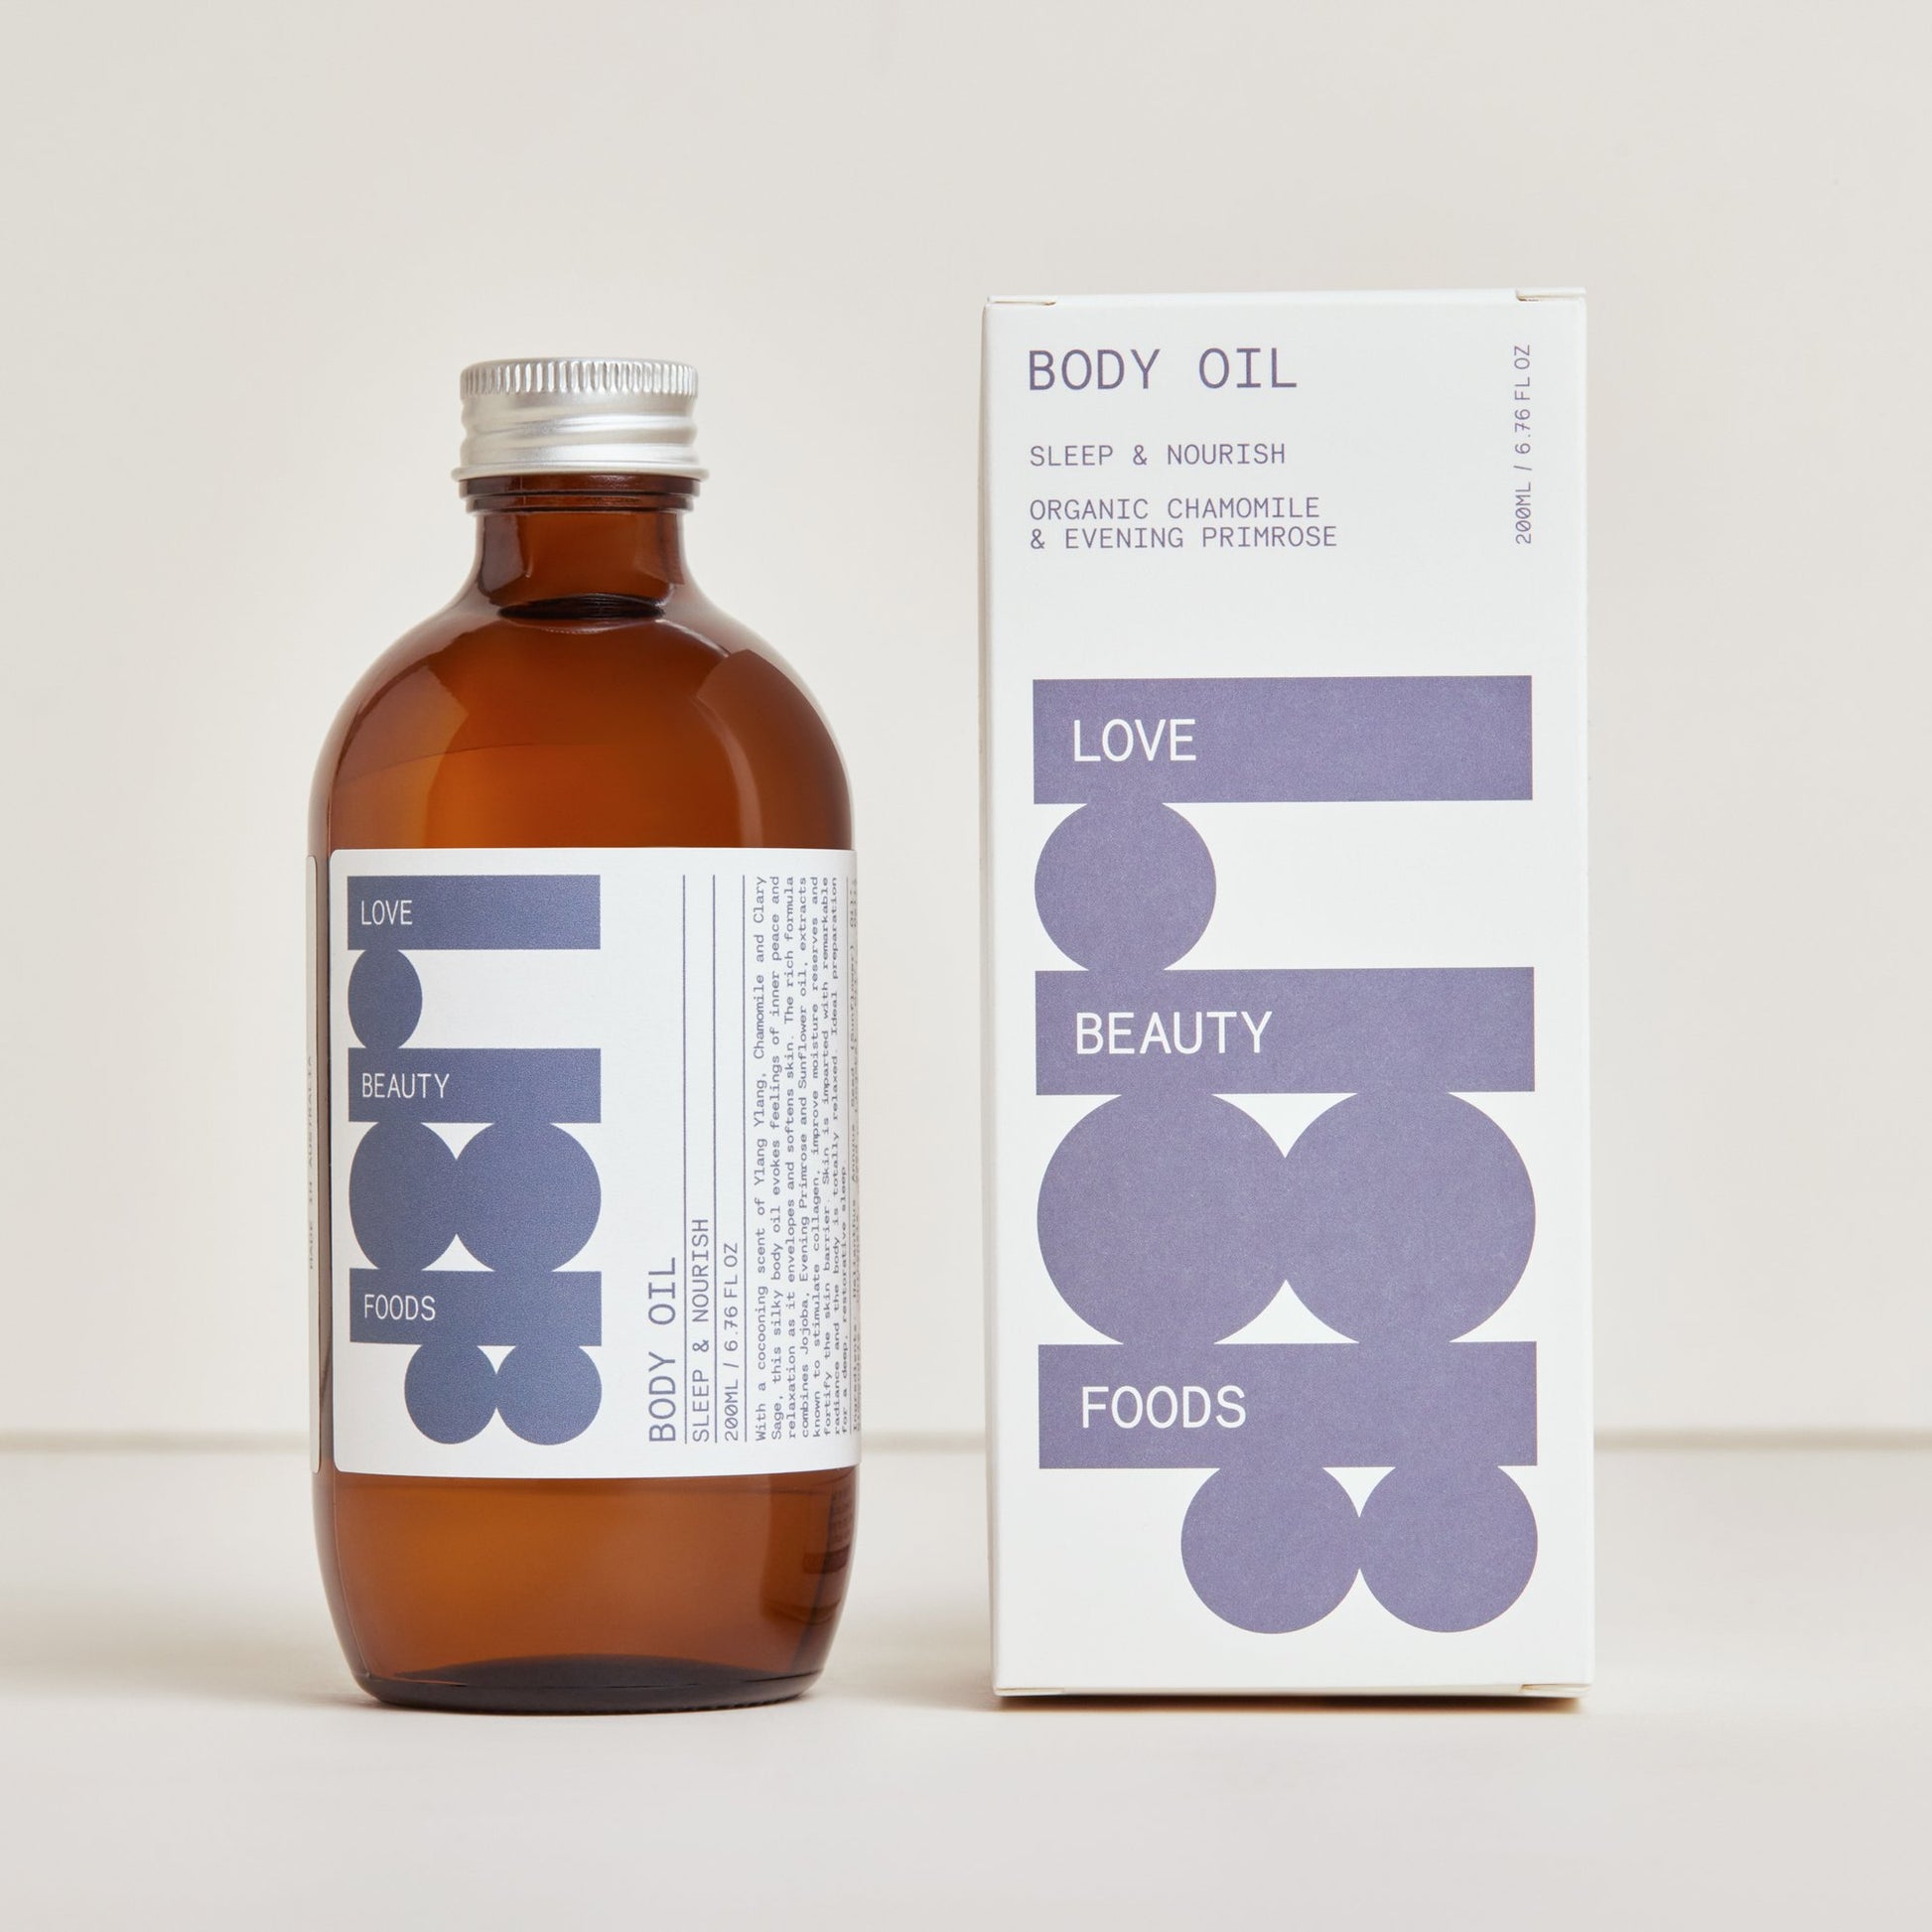 Sleep & Nourish Body Oil - Banish